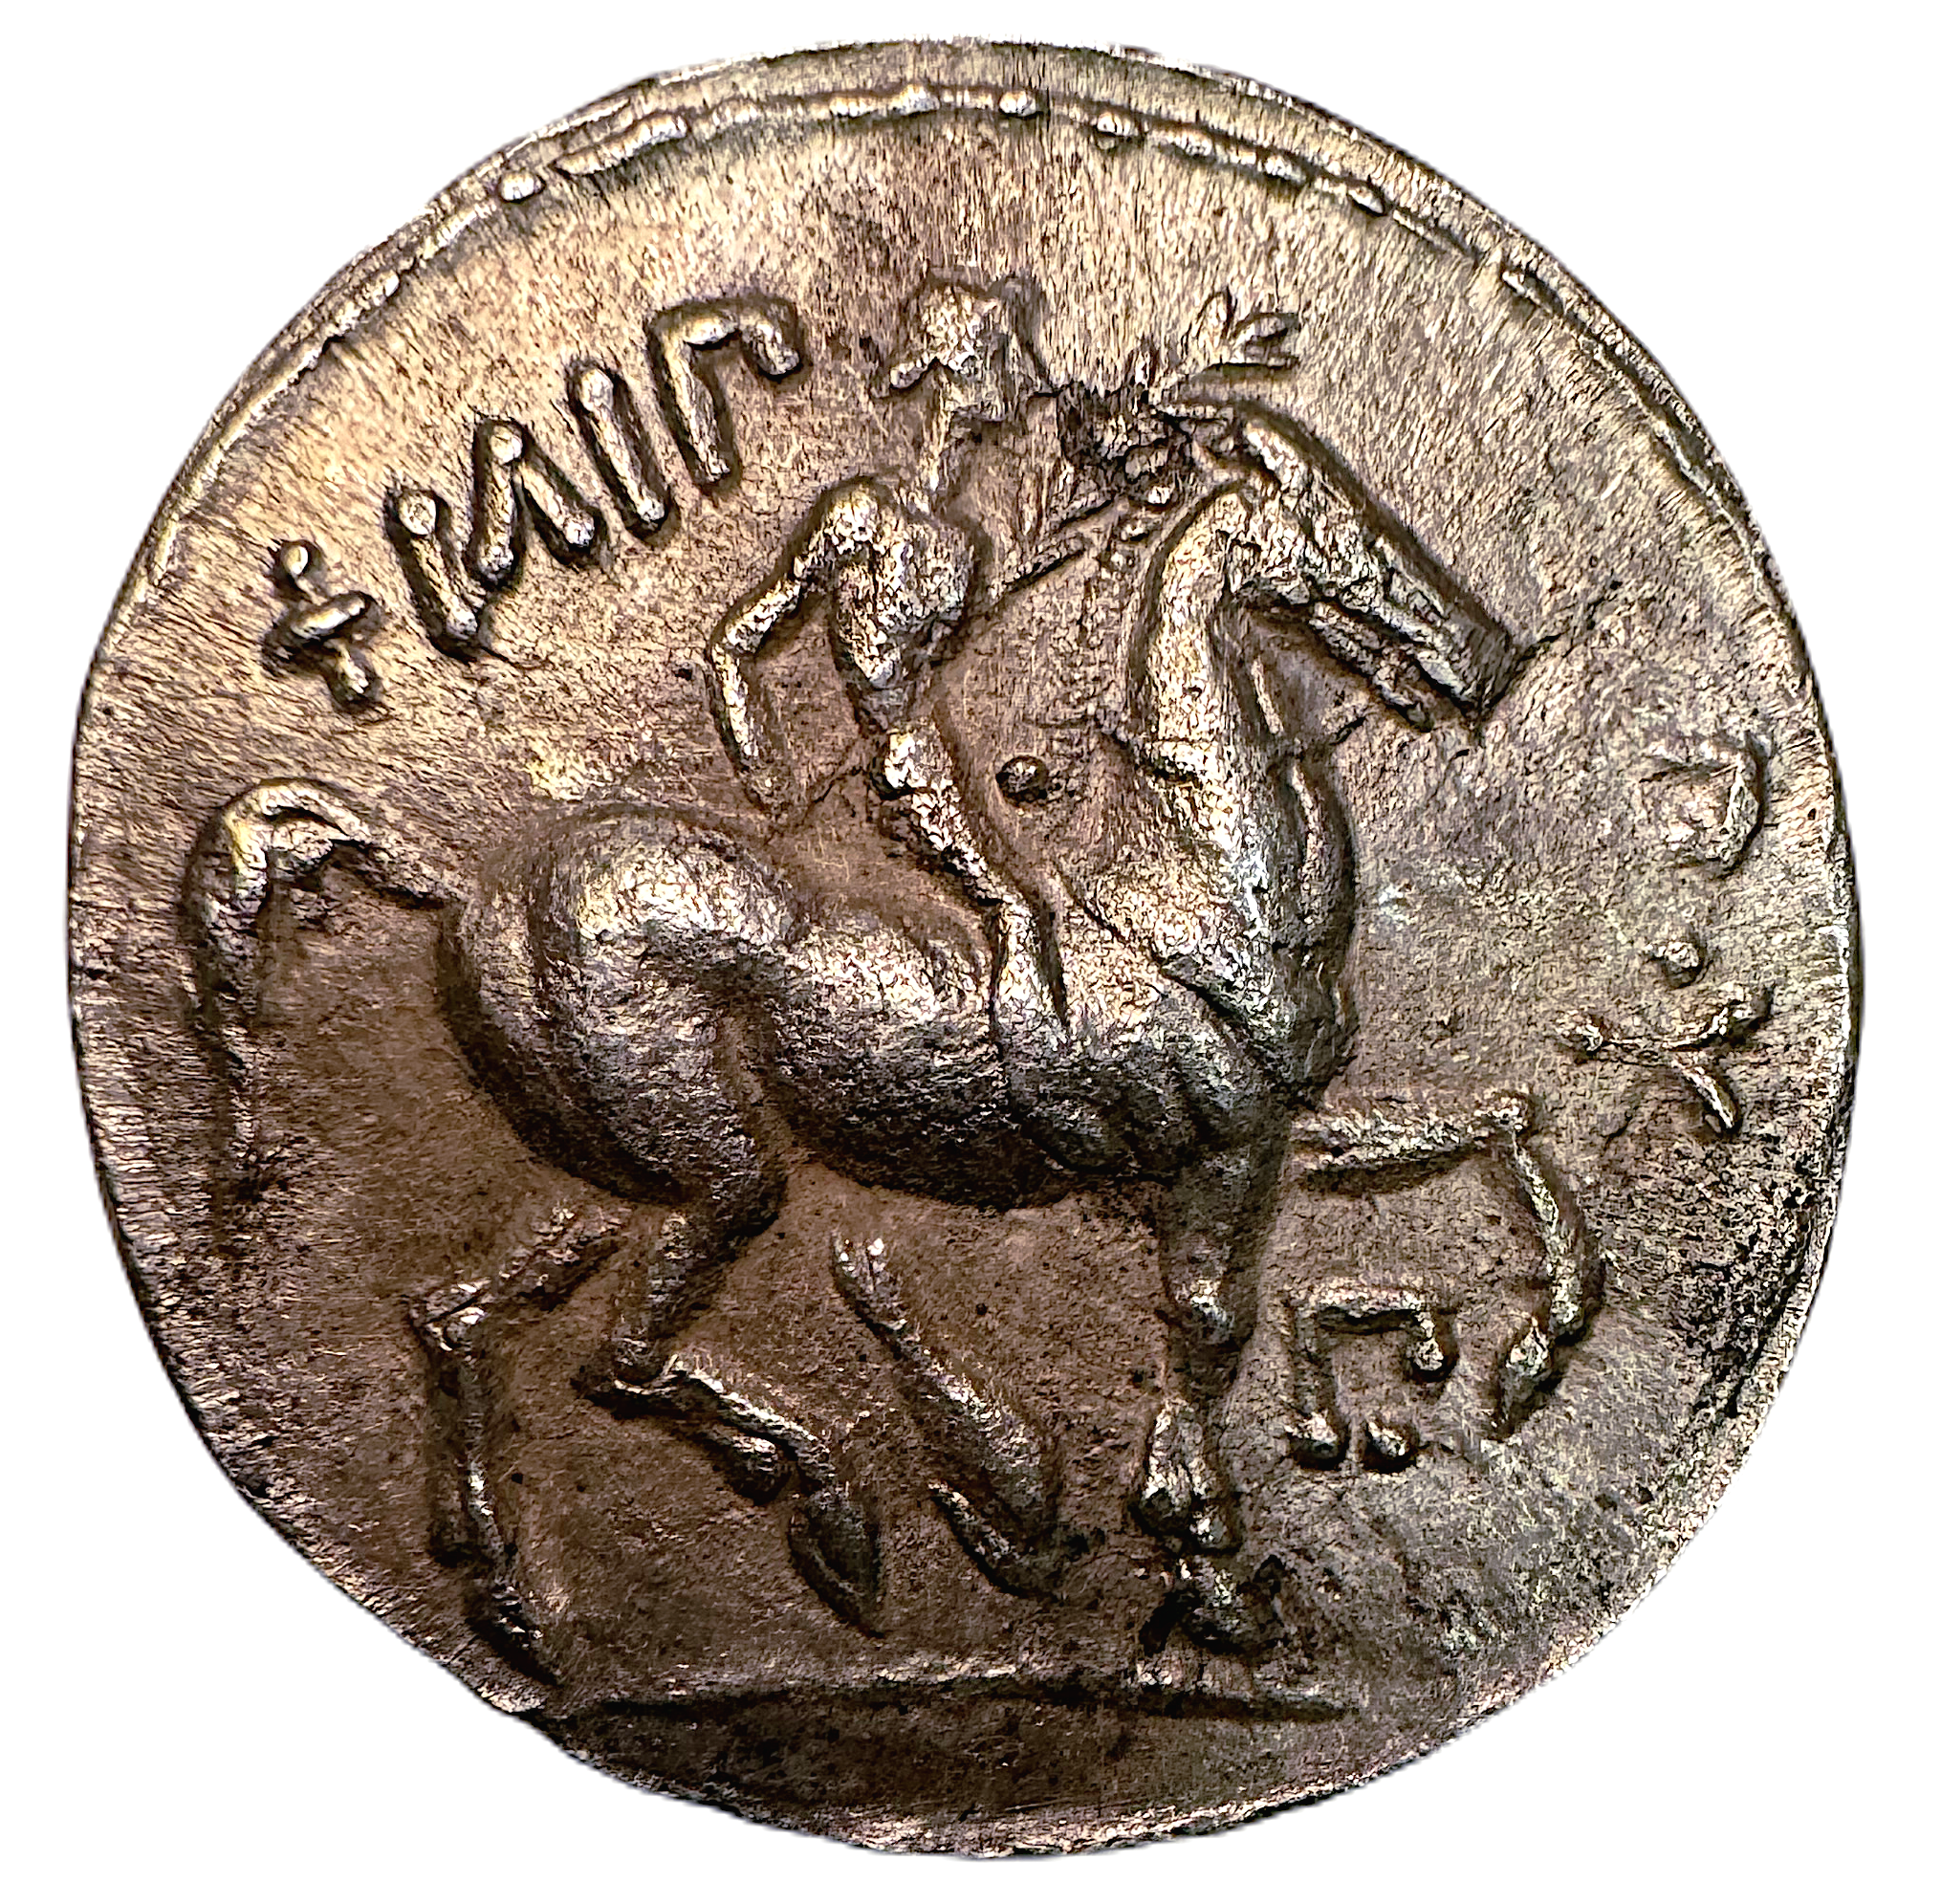 Philip II av Makedonien 359-336 f.Kr - Tetradrachm - Vackert exemplar